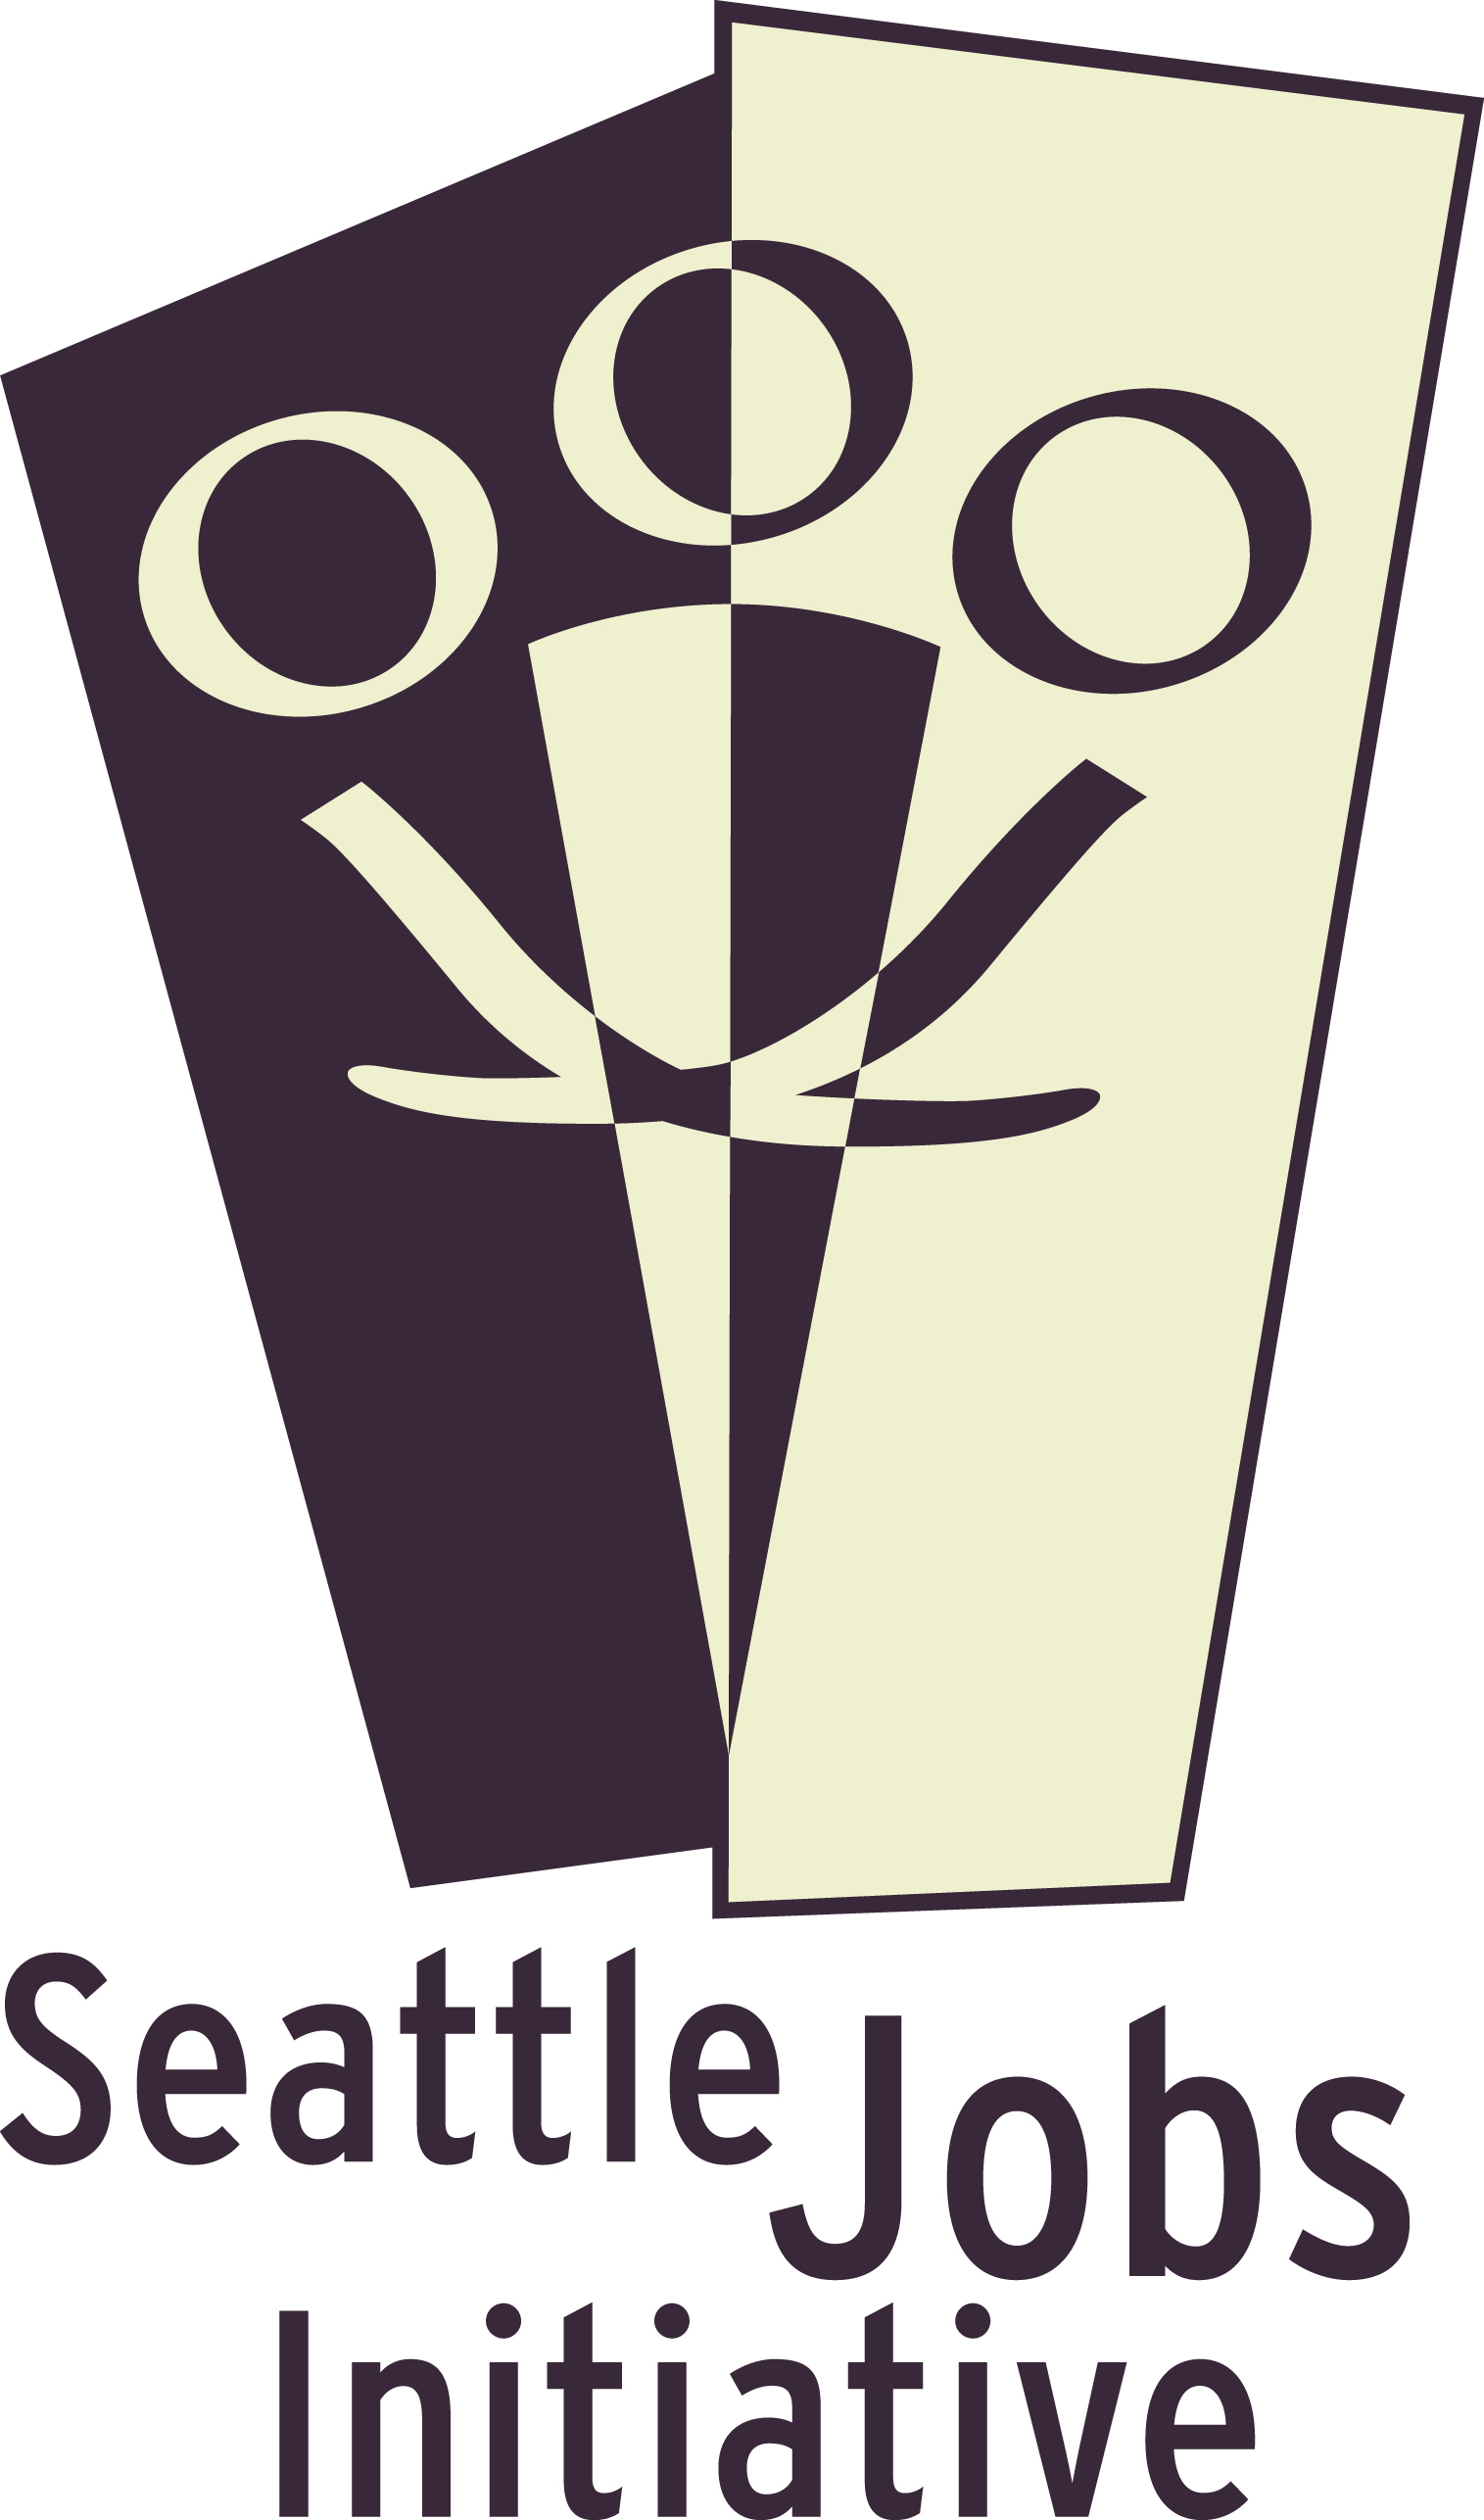 Seattle Jobs Initiative Logo